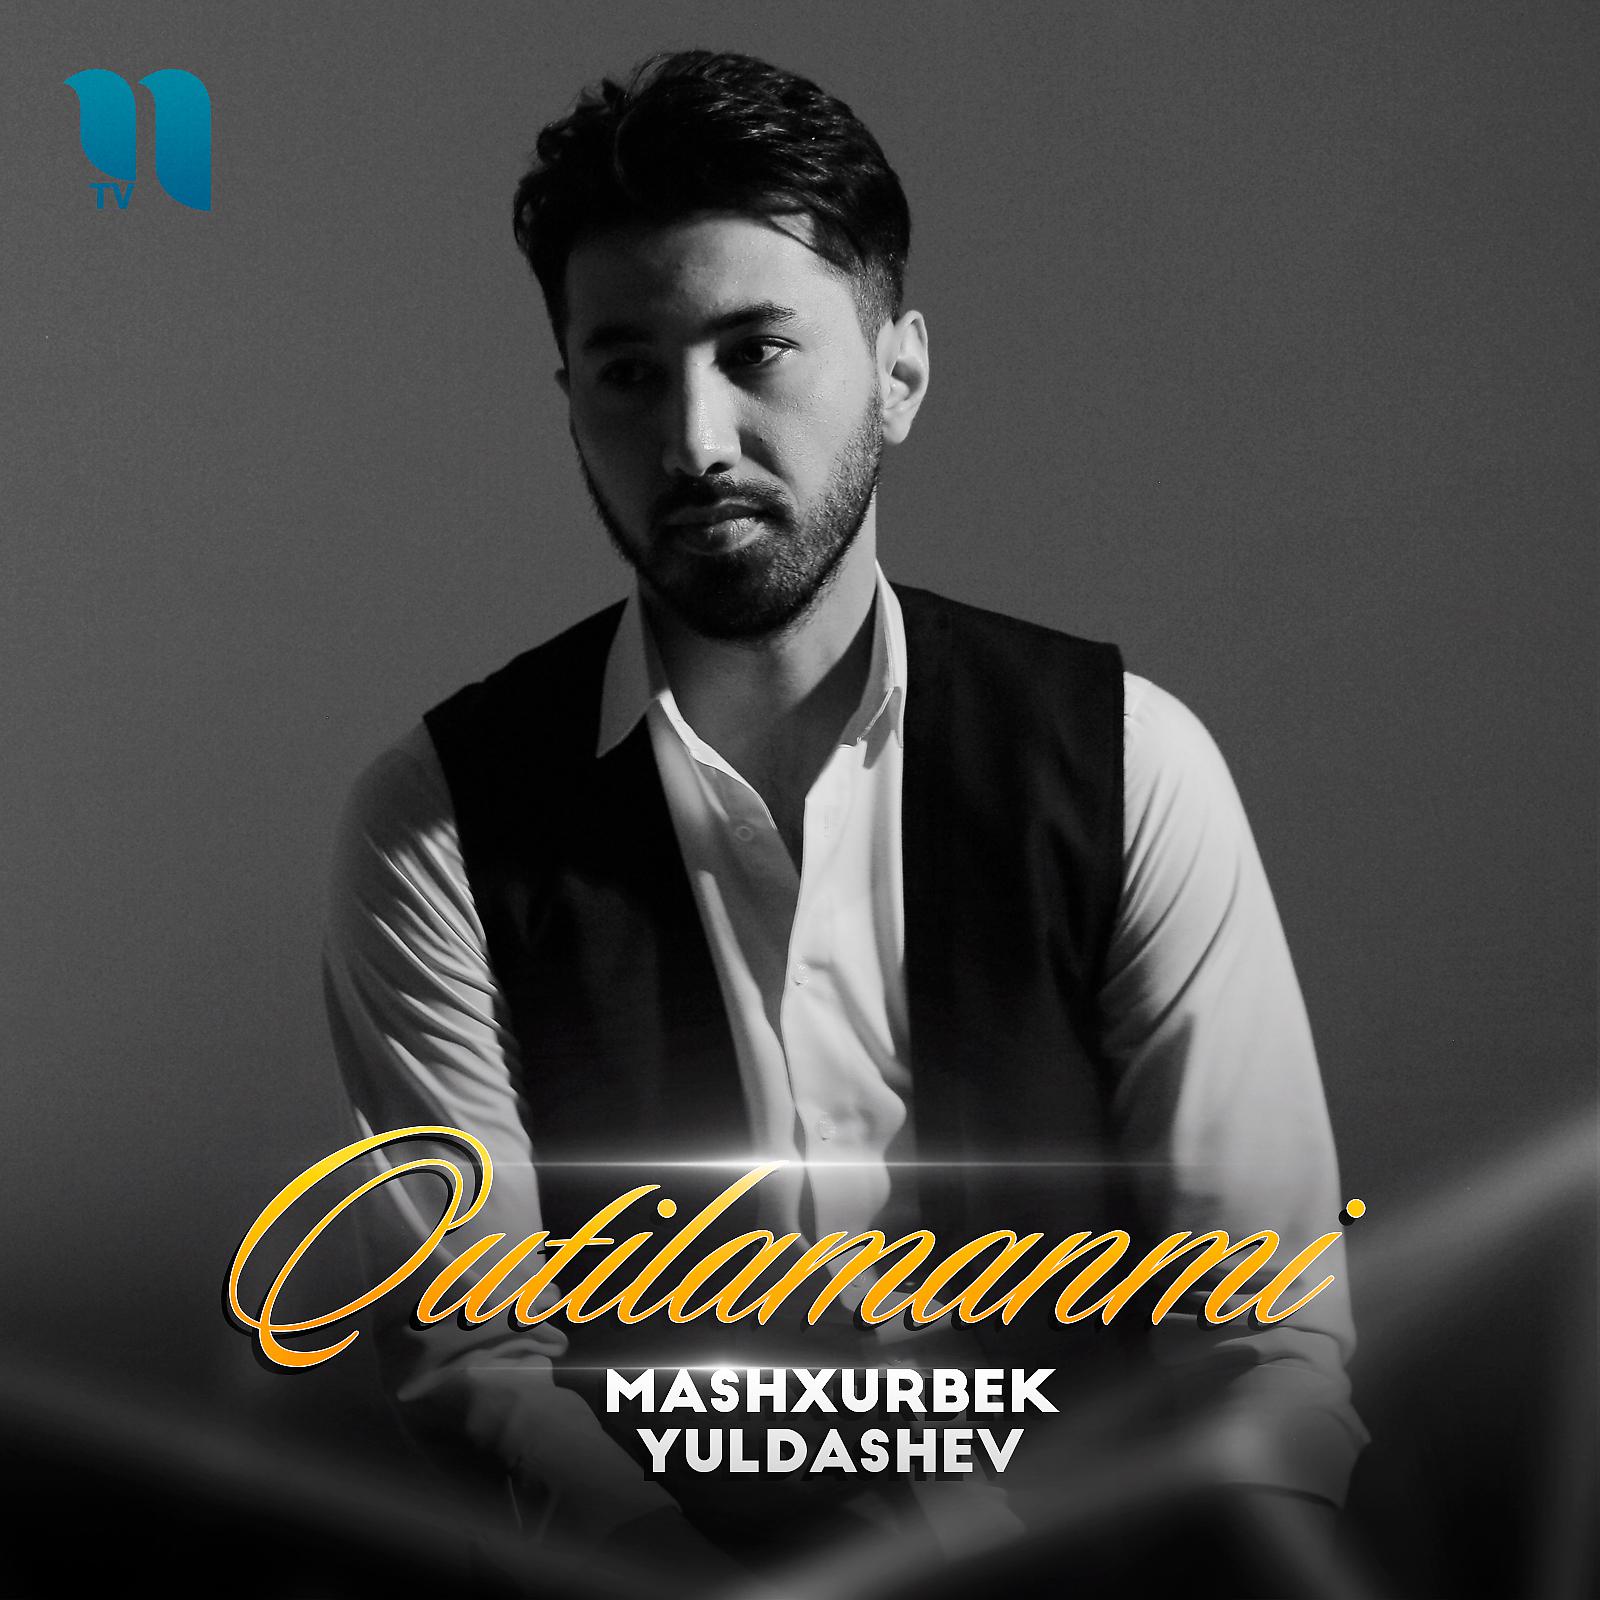 Постер альбома Qutilamanmi